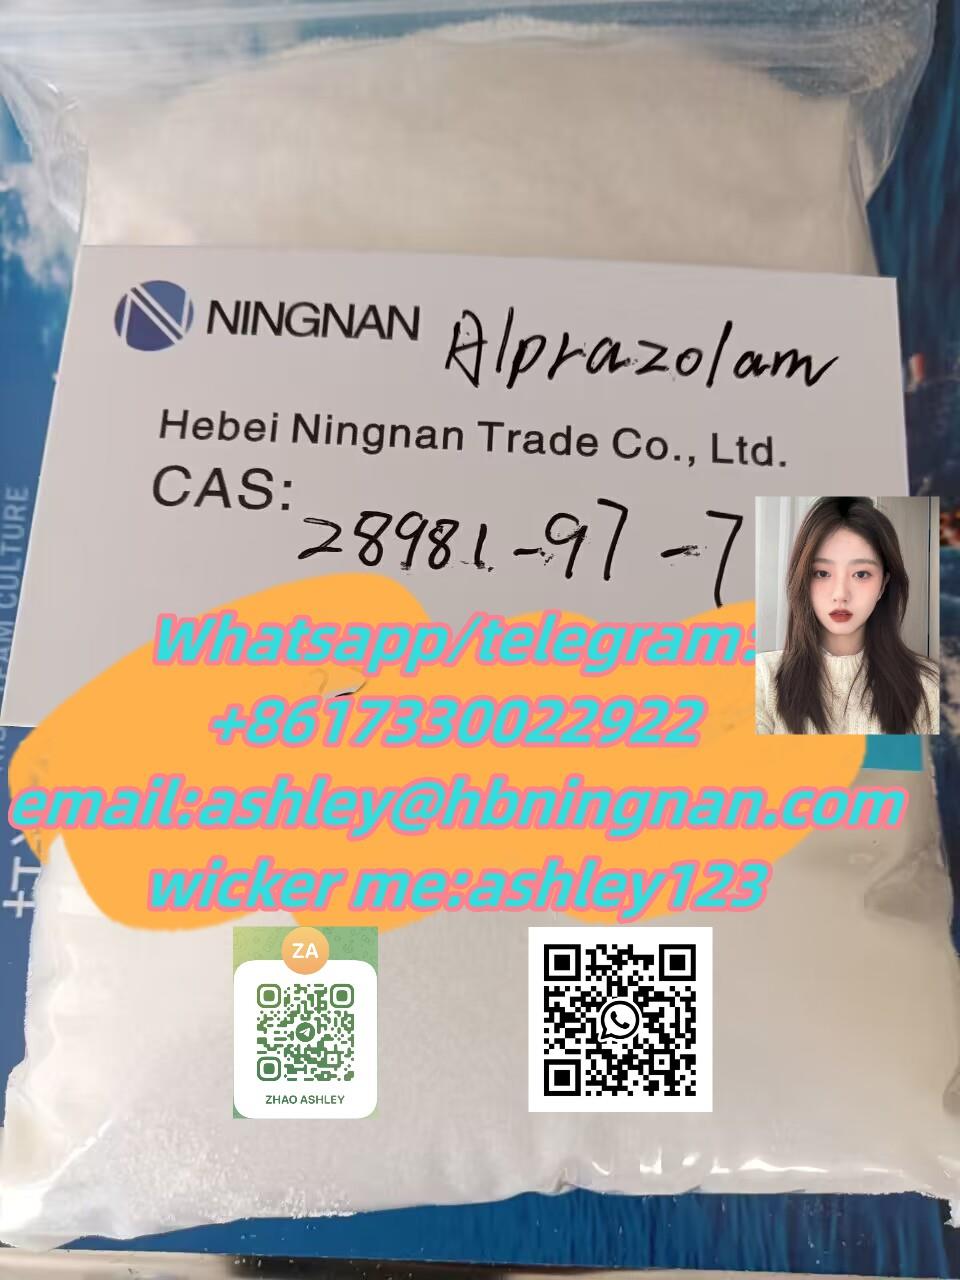 28981-97-7 Alprazolam Factory wholesale supply, competitive price!